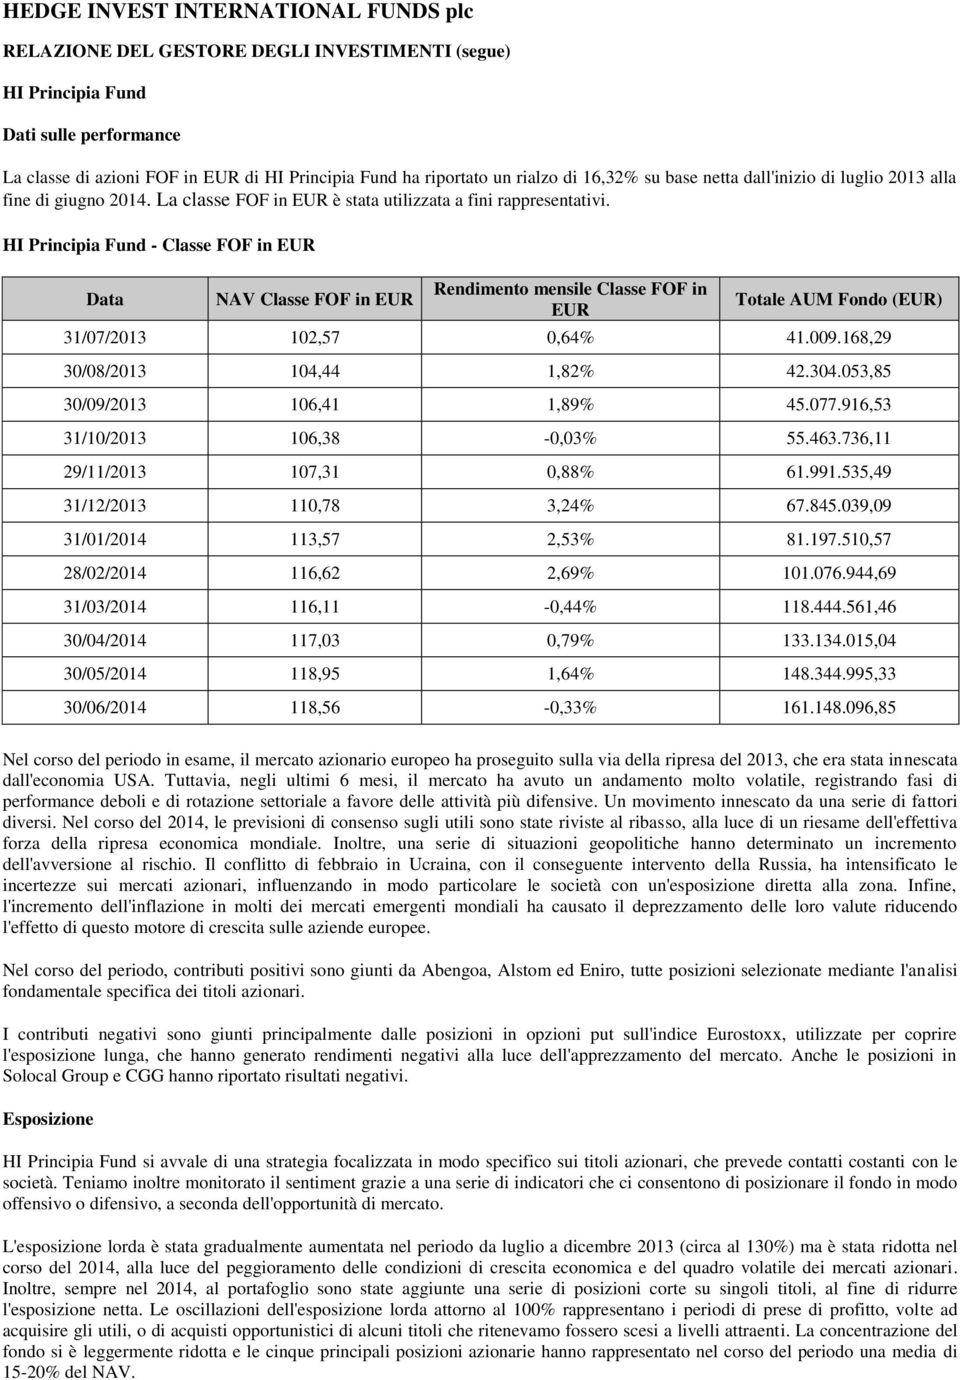 HI Principia Fund - Classe FOF in Data NAV Classe FOF in Rendimento mensile Classe FOF in Totale AUM Fondo () 31/07/2013 102,57 0,64% 41.009.168,29 30/08/2013 104,44 1,82% 42.304.